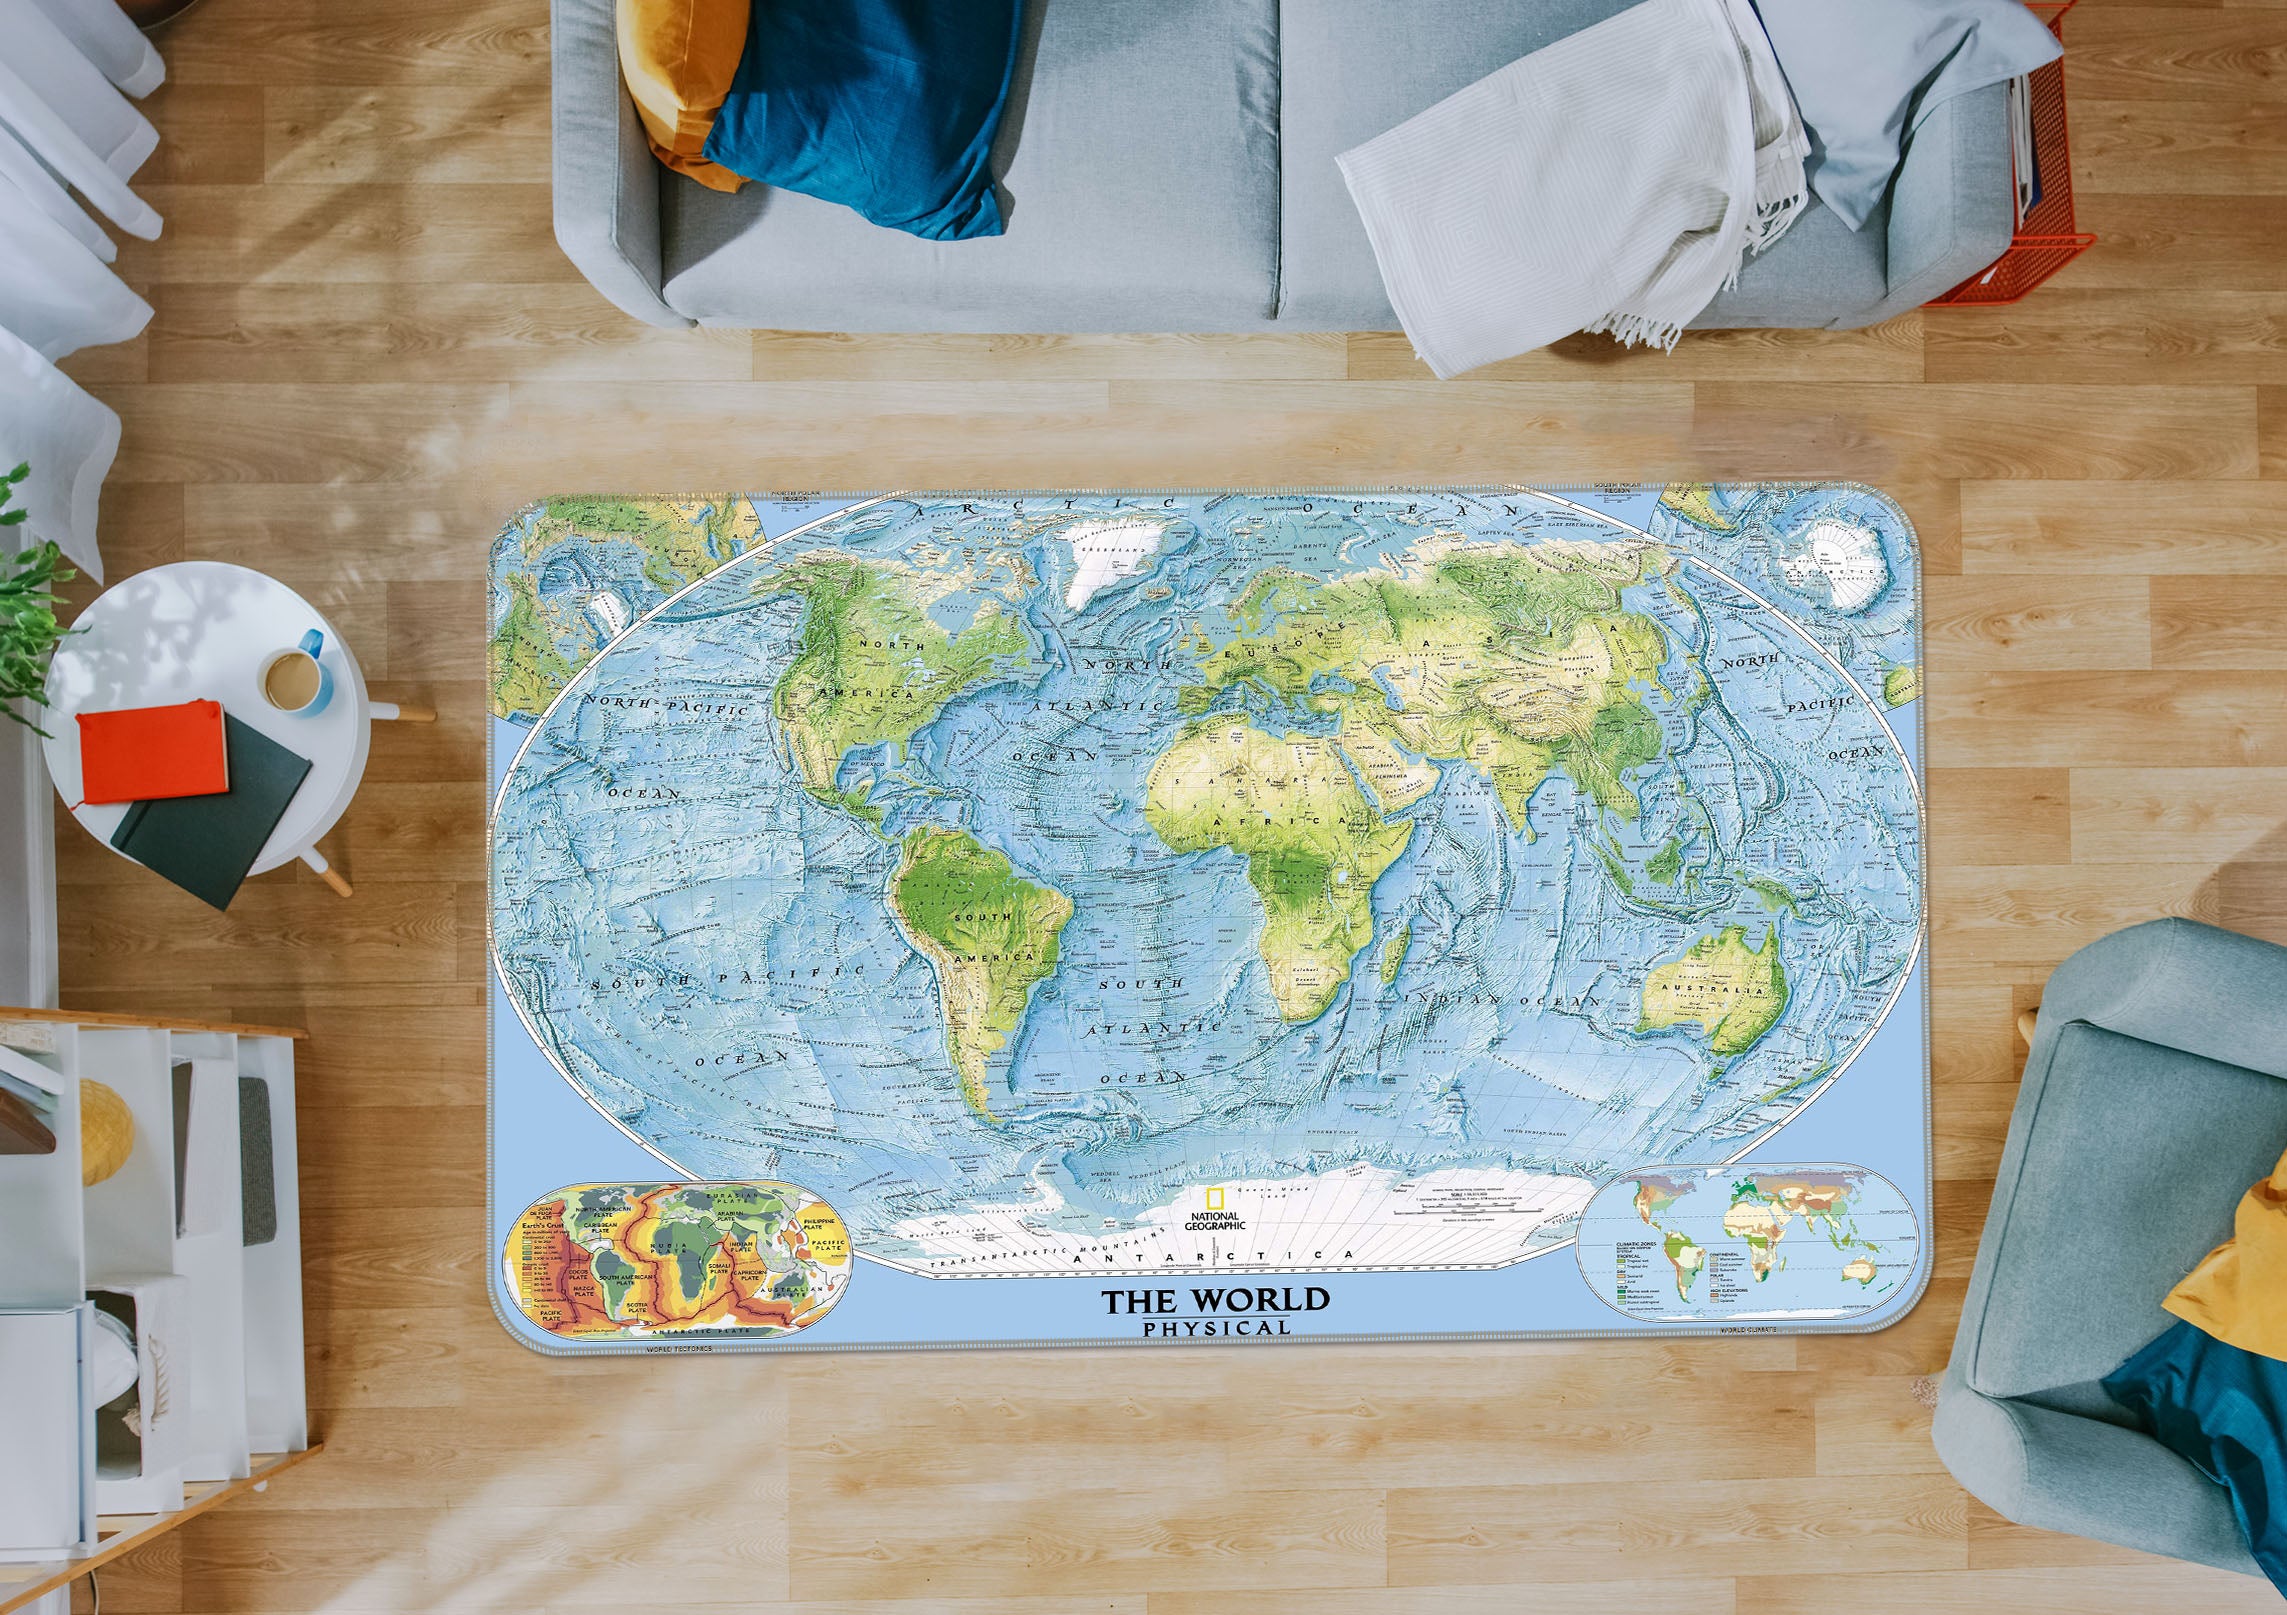 3D Sea Island 324 World Map Non Slip Rug Mat